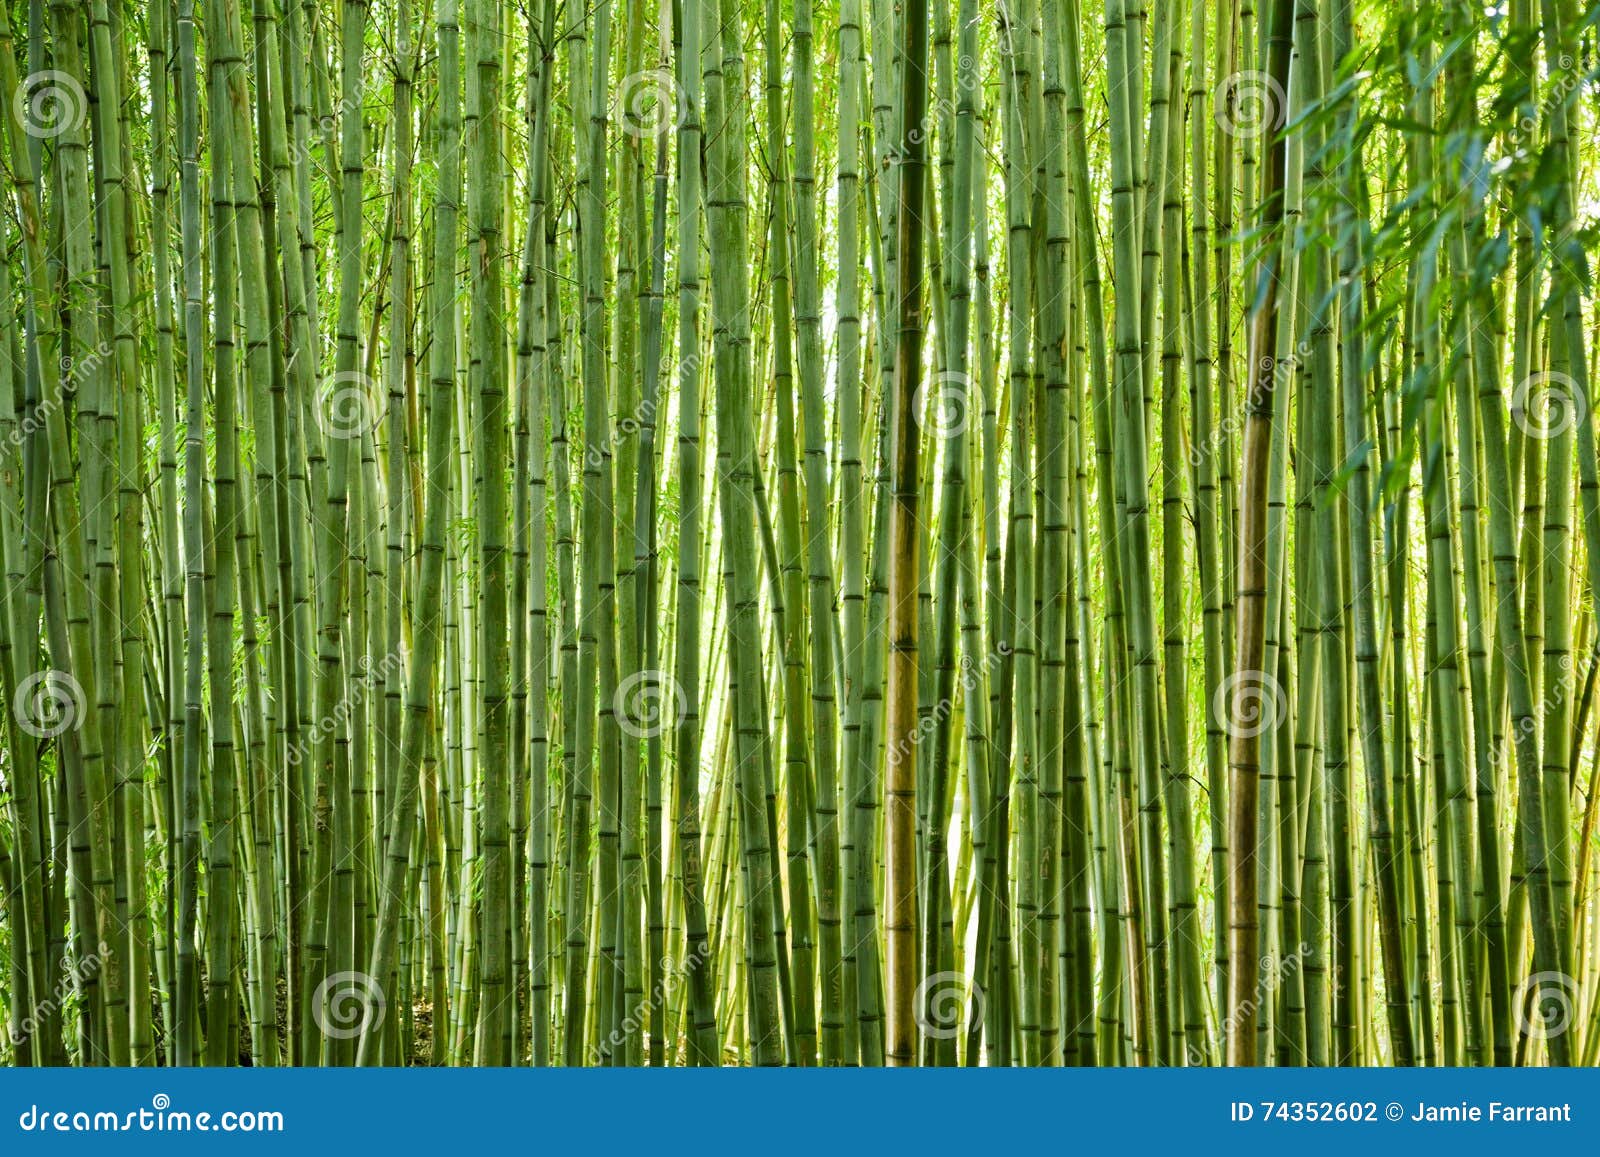 Lush Green Bamboo